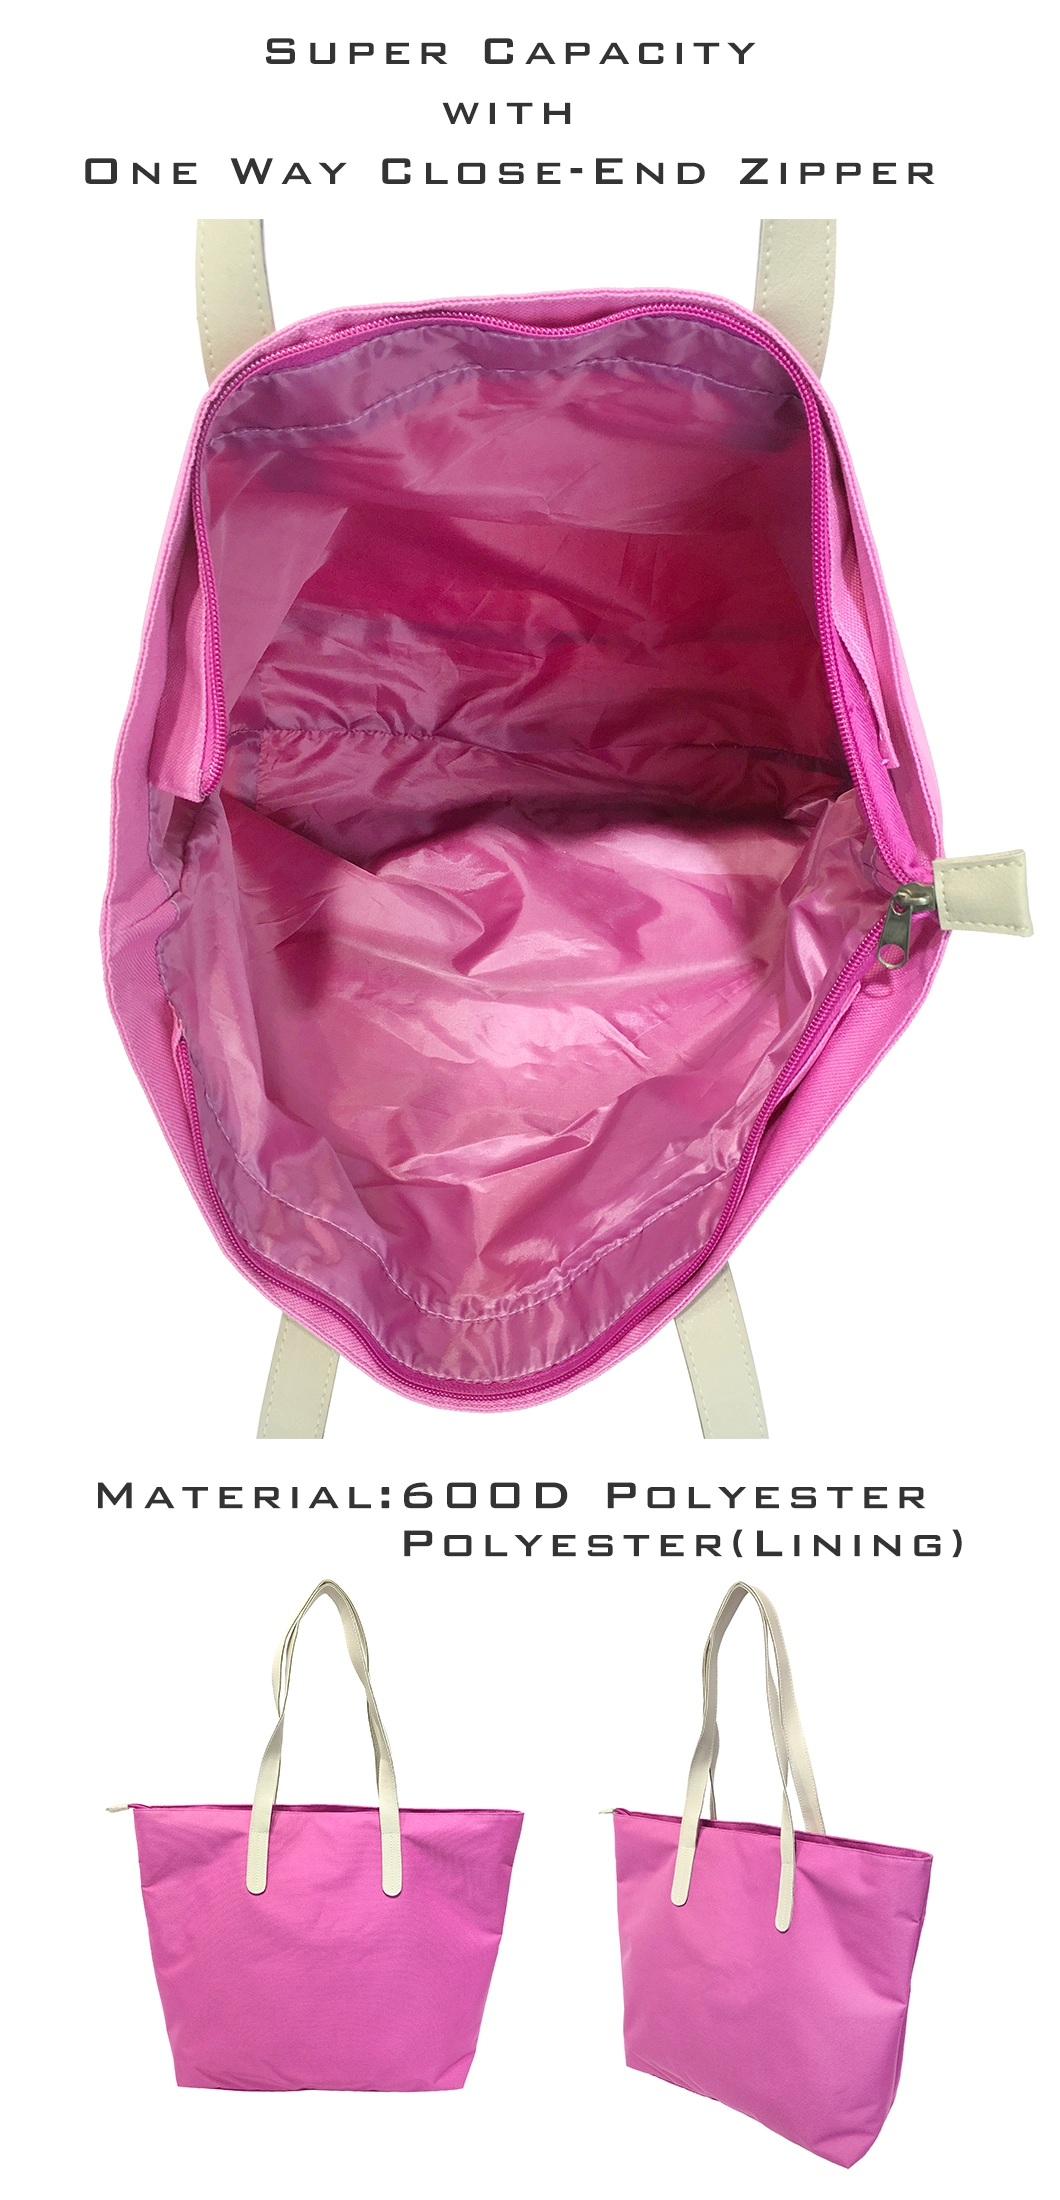 Customized Logo Promotional Bag Shopping Bag Sling Bags Tote Bag